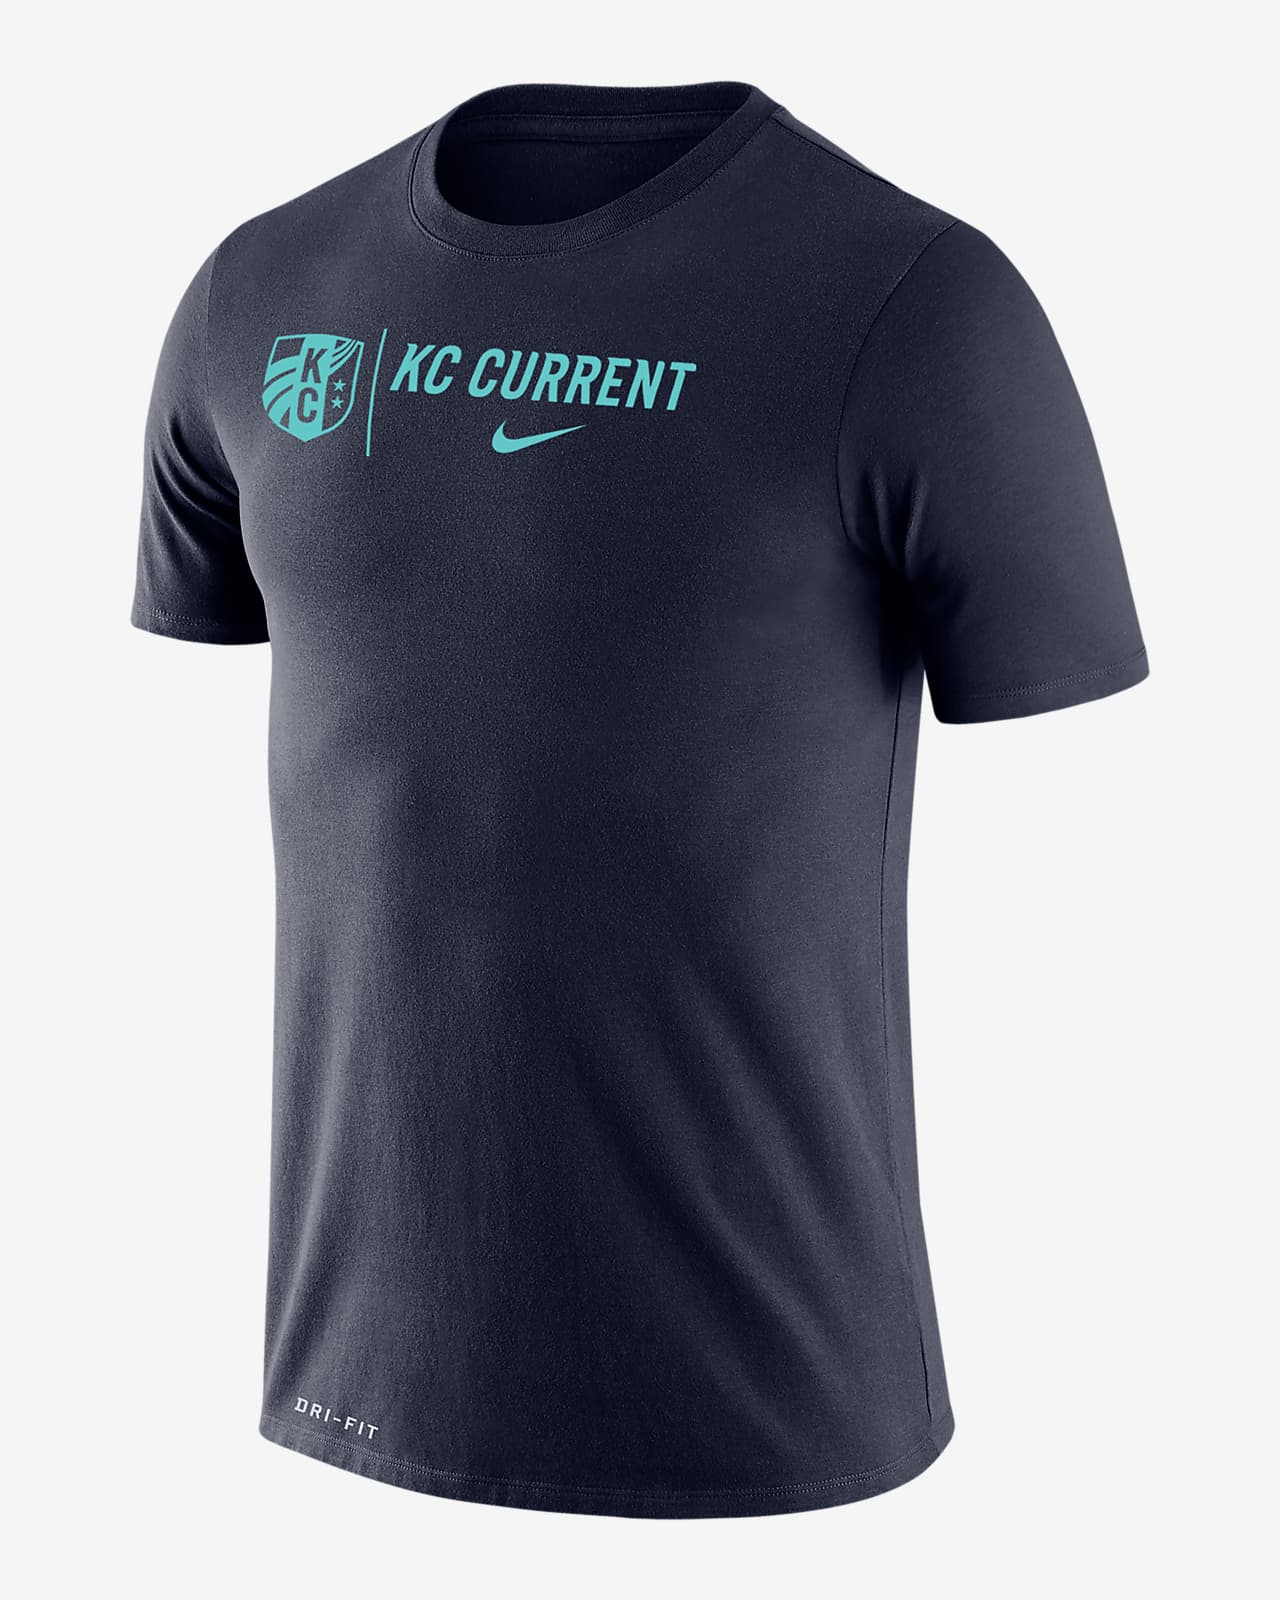 Kansas City Current Legend Men's Nike Dri-FIT Soccer T-Shirt